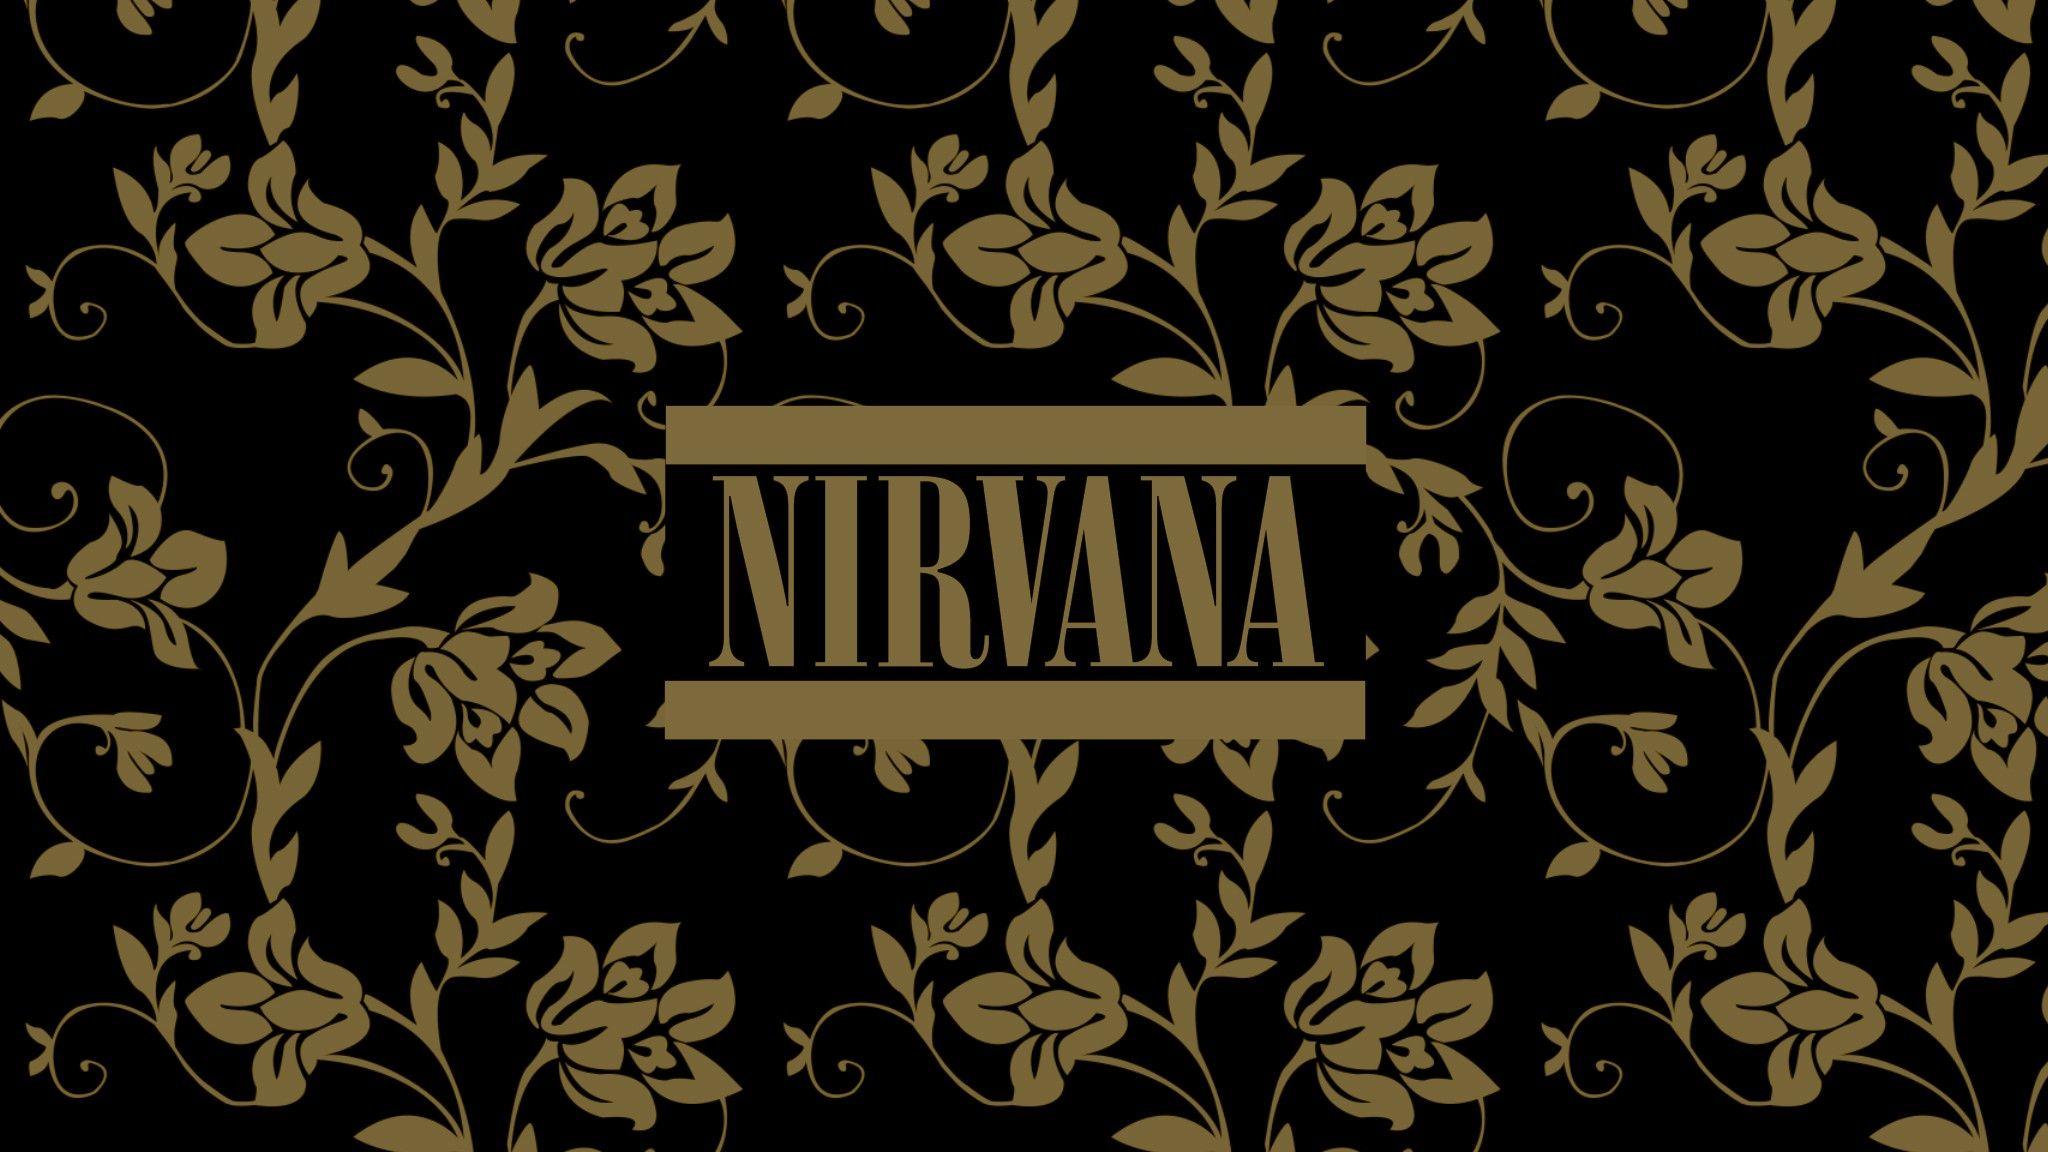 Nirvana Flower Logo - flowers, patterns, typography, Nirvana, music bands, floral, black ...